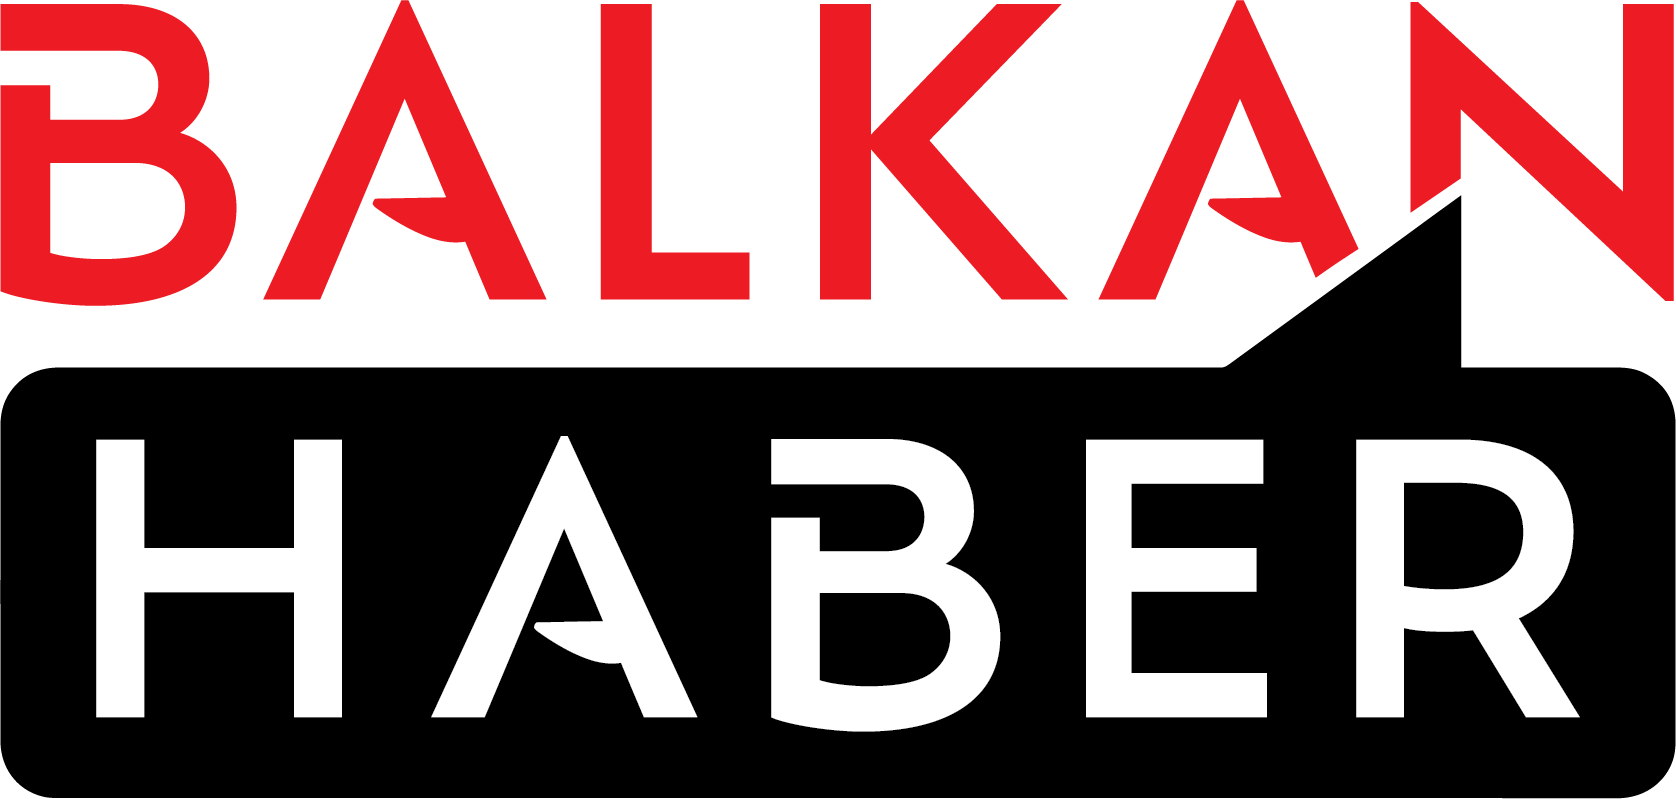 Balkan Haber